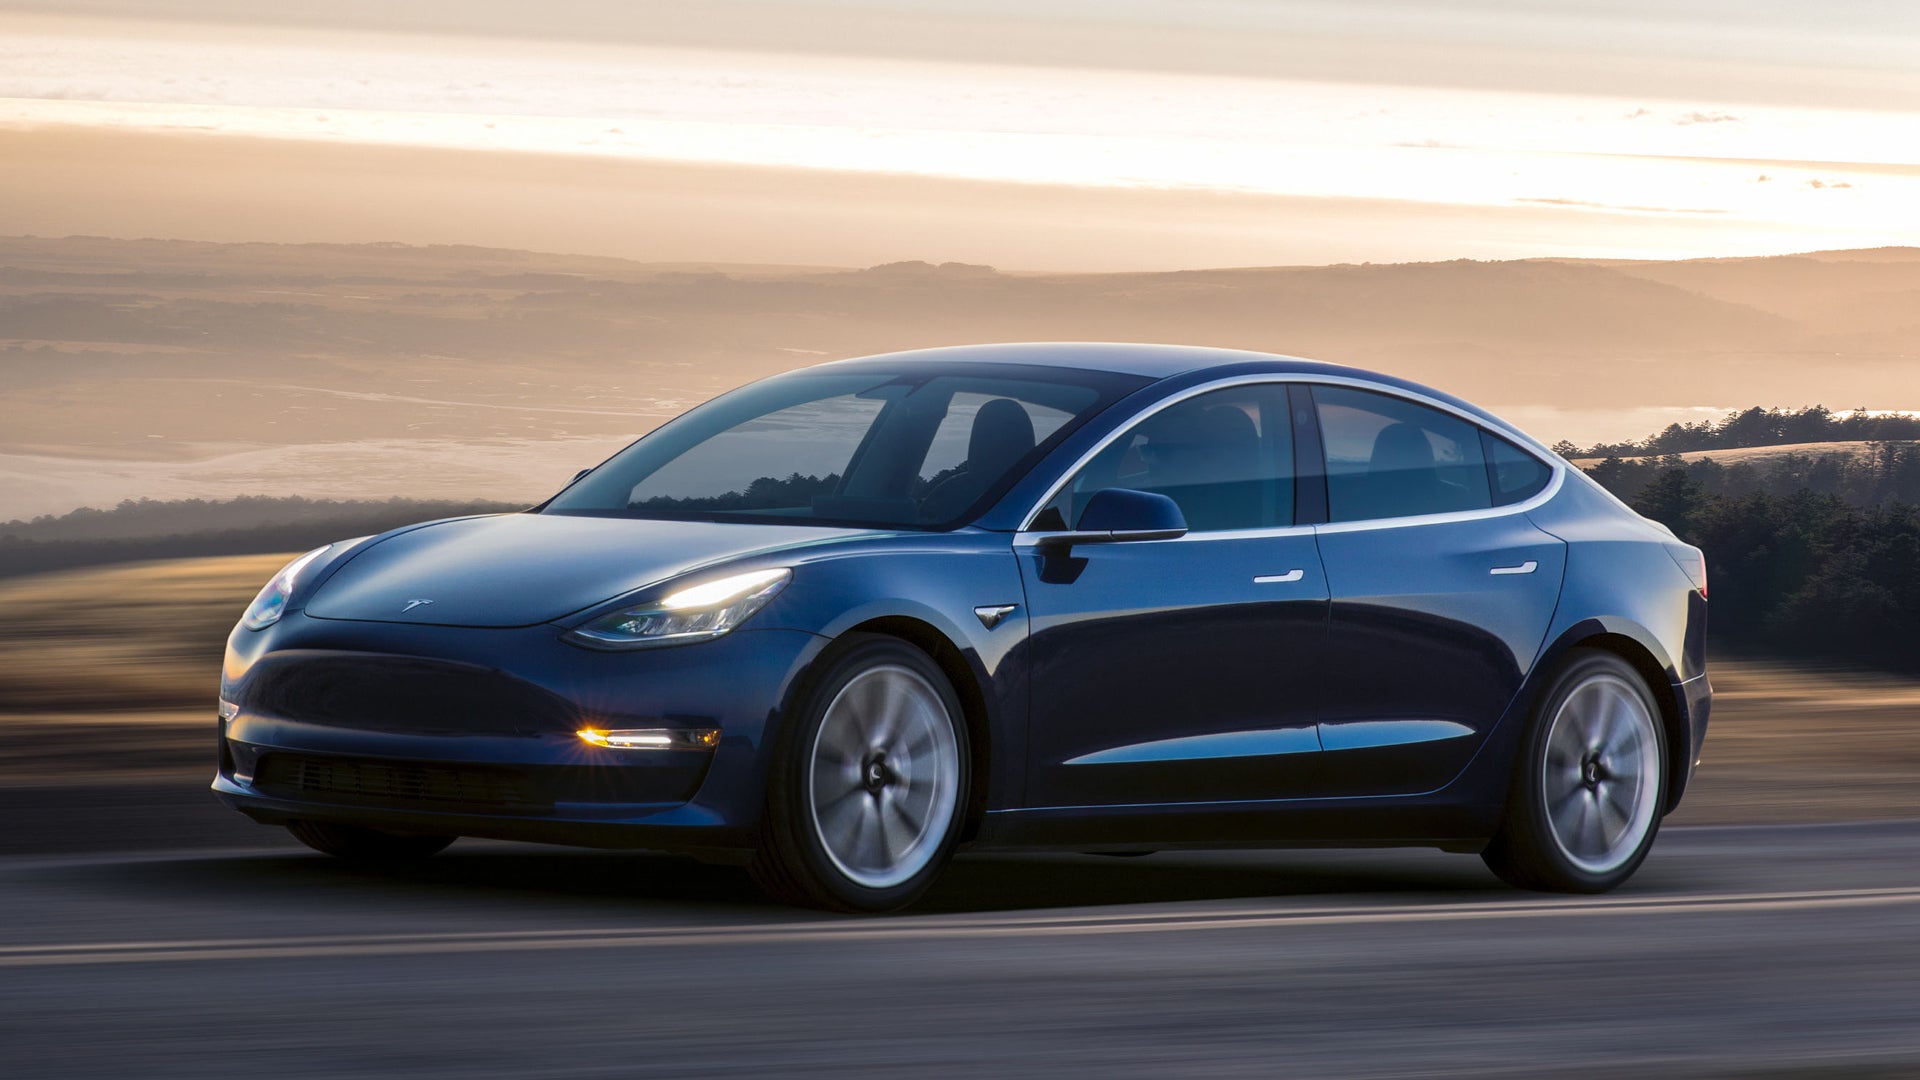 Tesla Model 3 Production Is Already Behind Schedule, ‘Bottlenecks’ To Blame